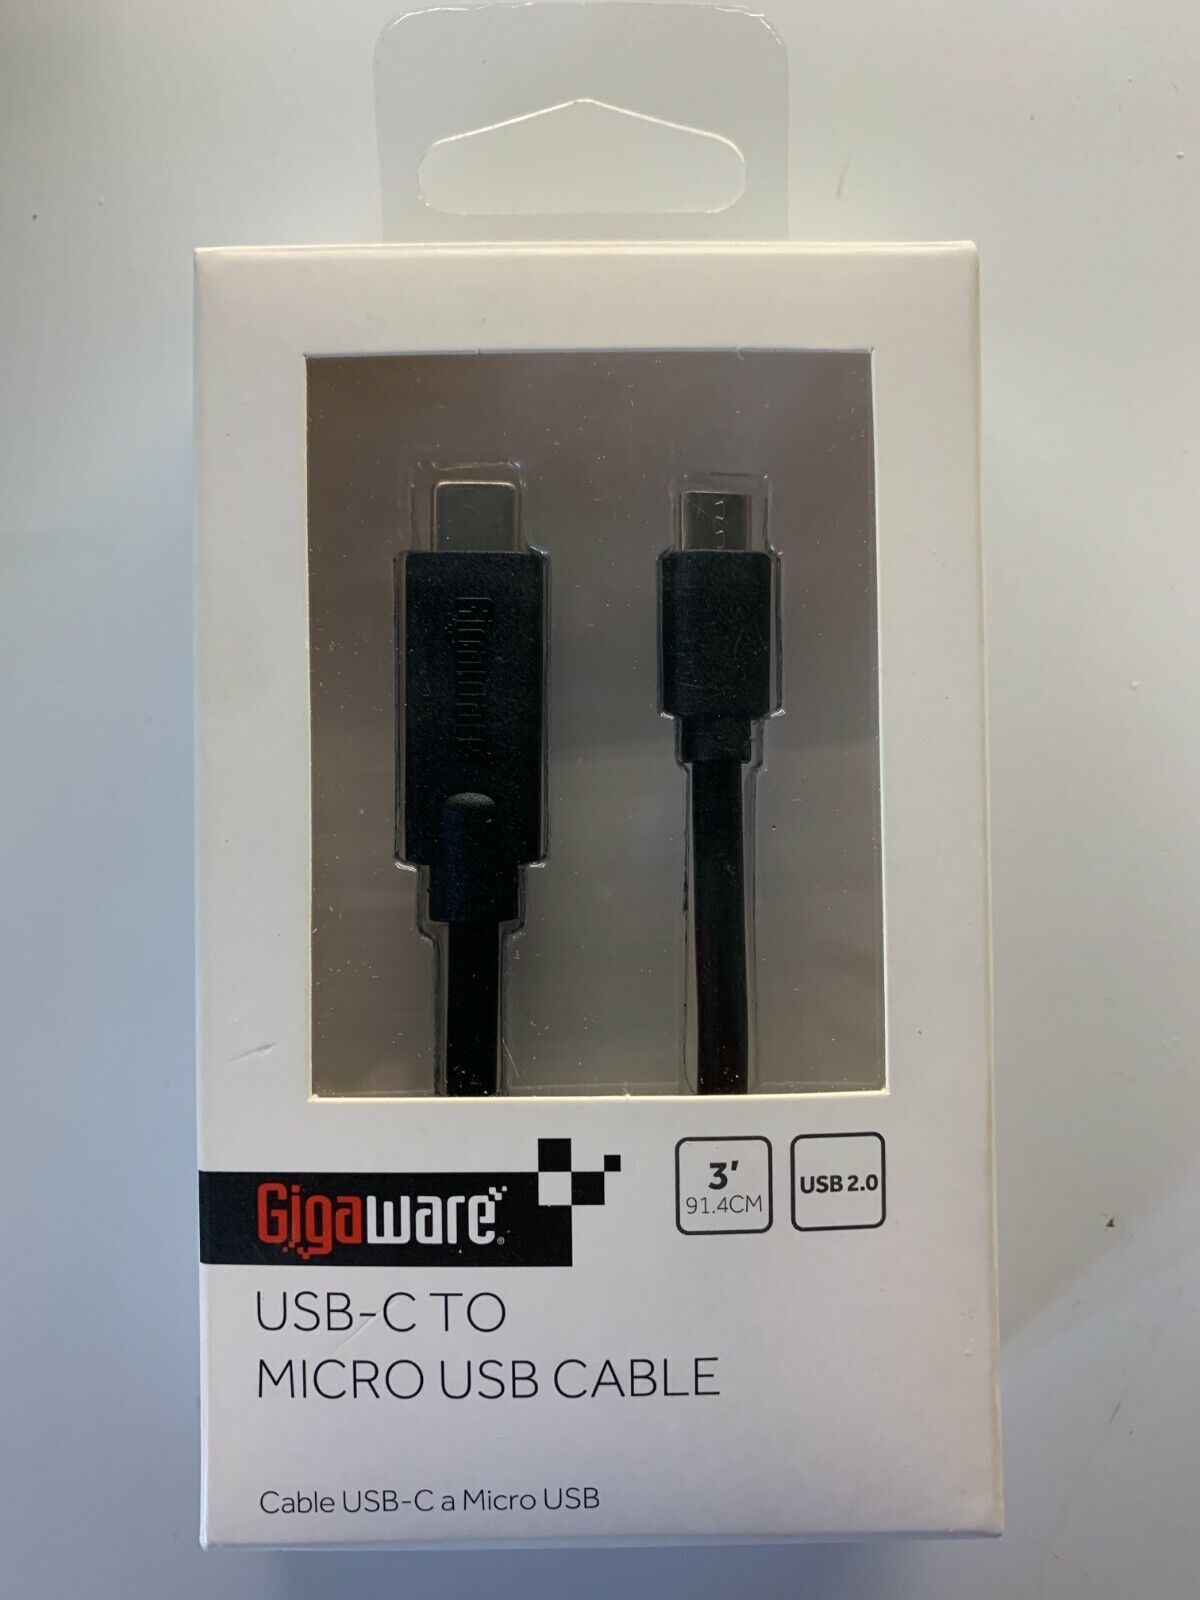 Gigaware 3-Foot USB Type C-to-Micro USB Cable RadioShack 2604619 Ships FREE